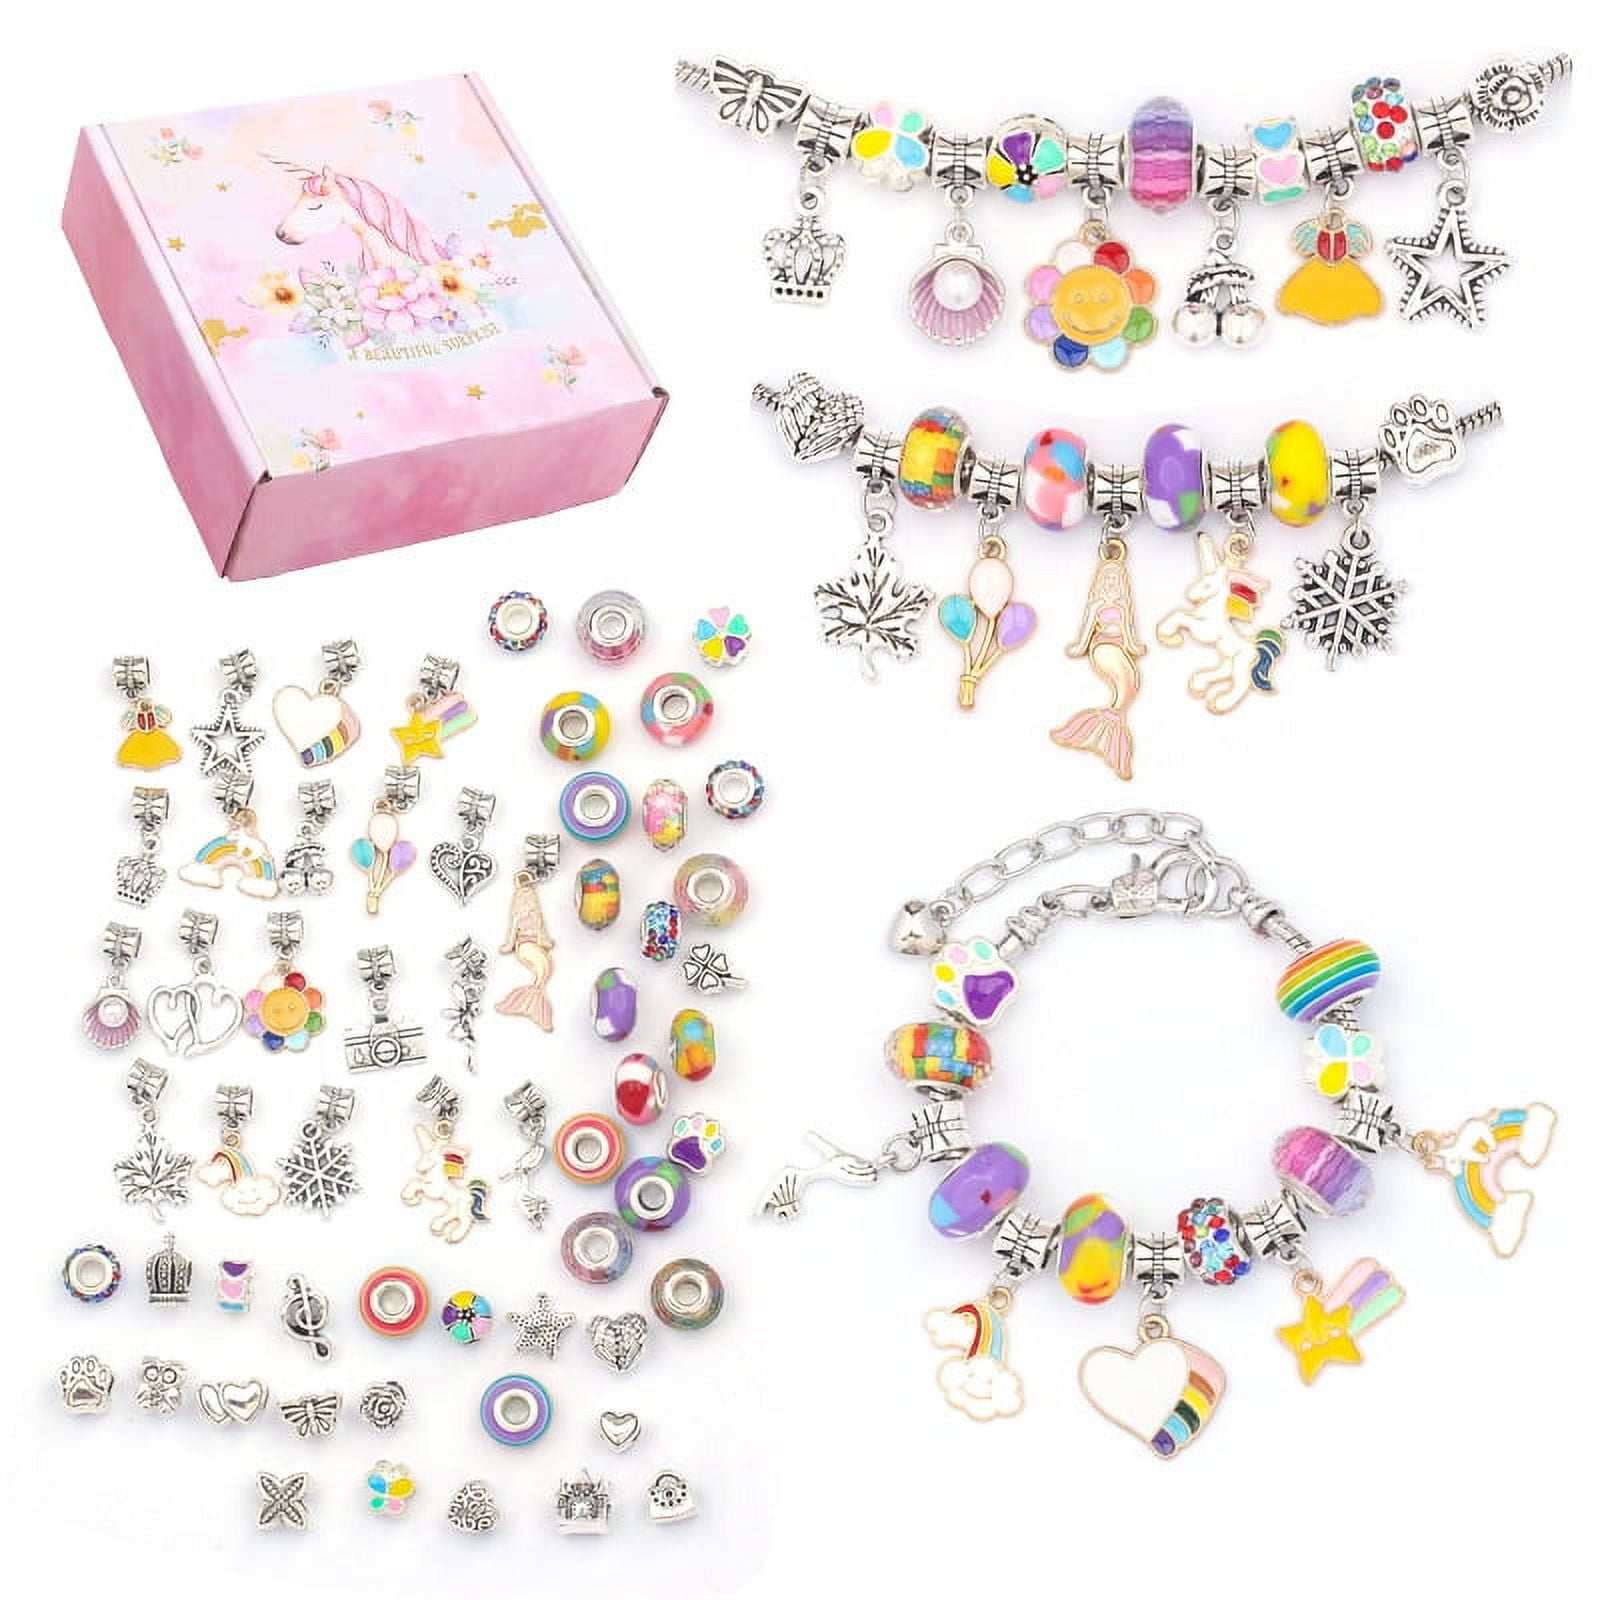 85 Pcs Diy Charm Bracelet Making Kit, Bangle Jewelry Making Kit, Diy Gift  Box Set With Beads, Bracelets